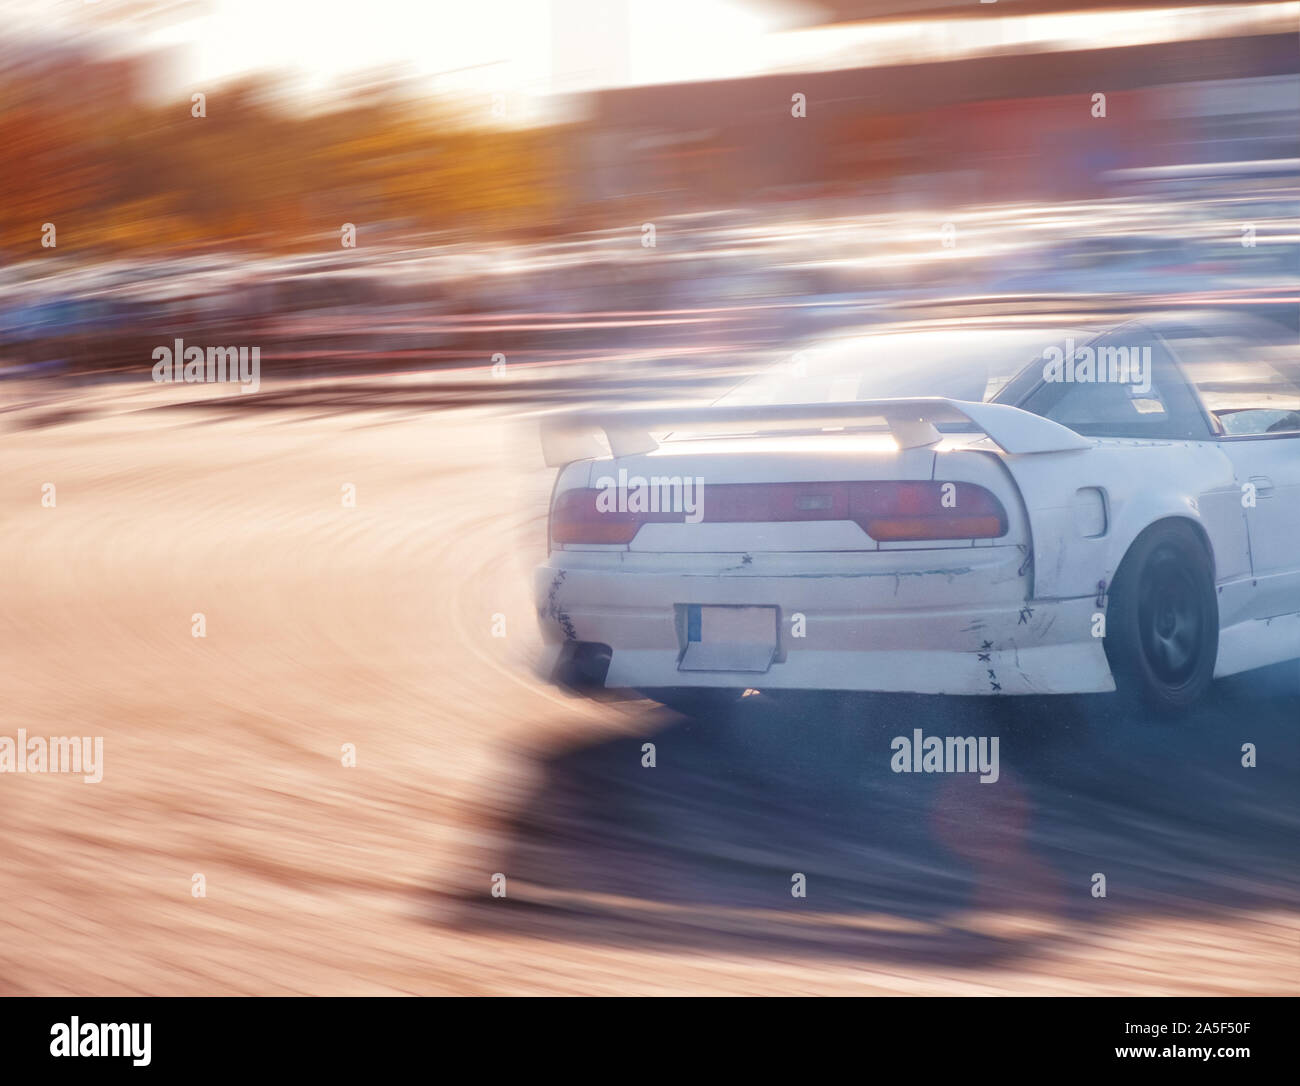 Car drifting, Blurred of image diffusion race drift car Stock Photo